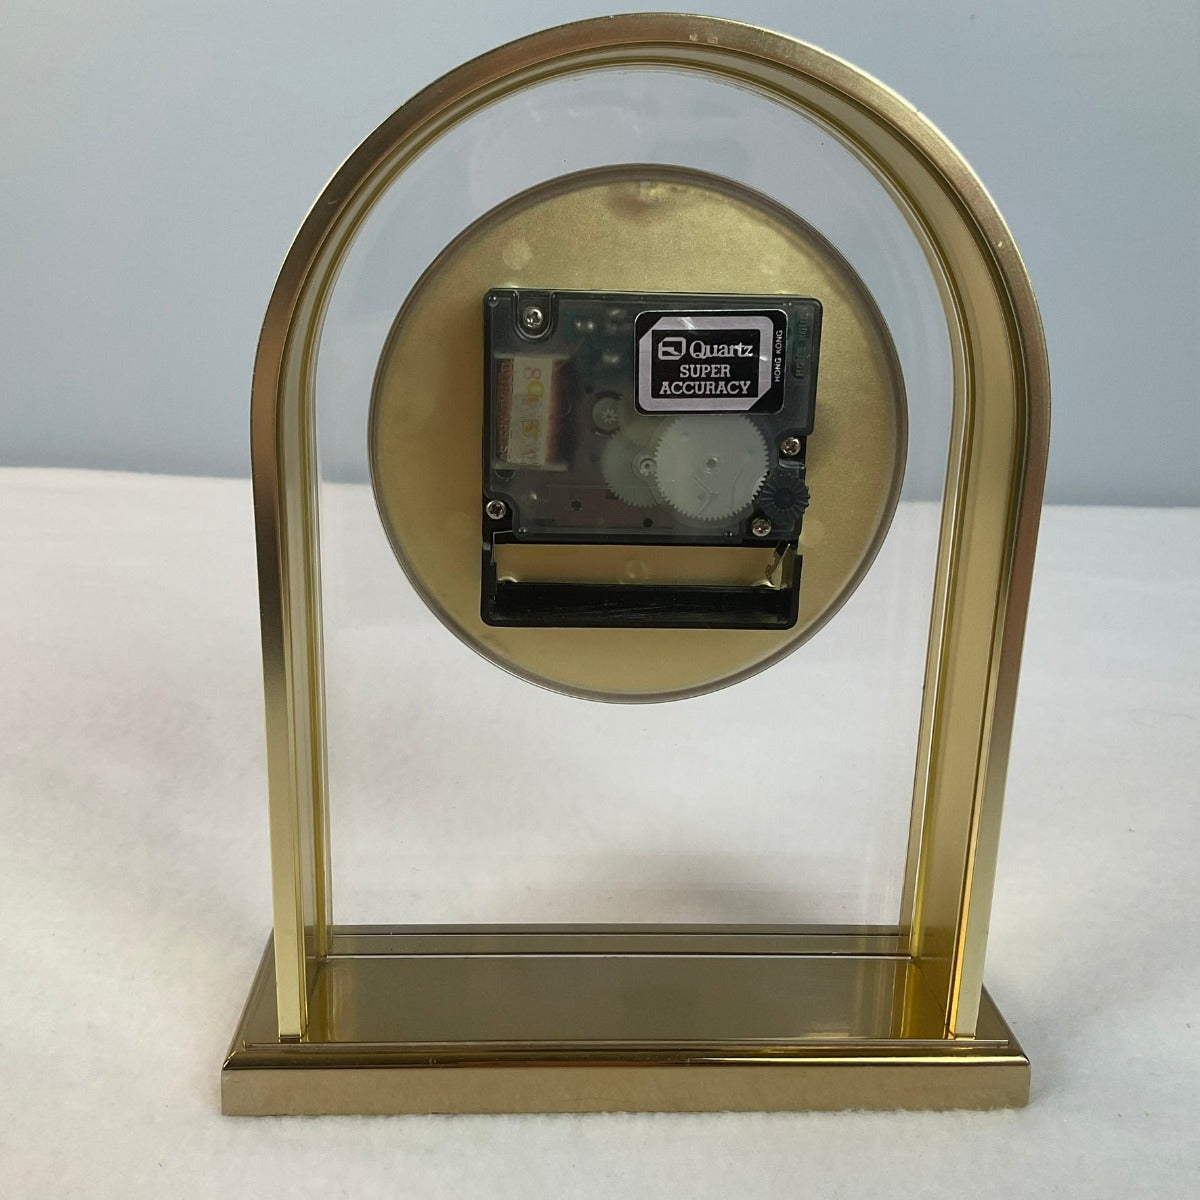 Equity Clock Quartz Vintage Analog Table Mantle Clock in Brass - Back